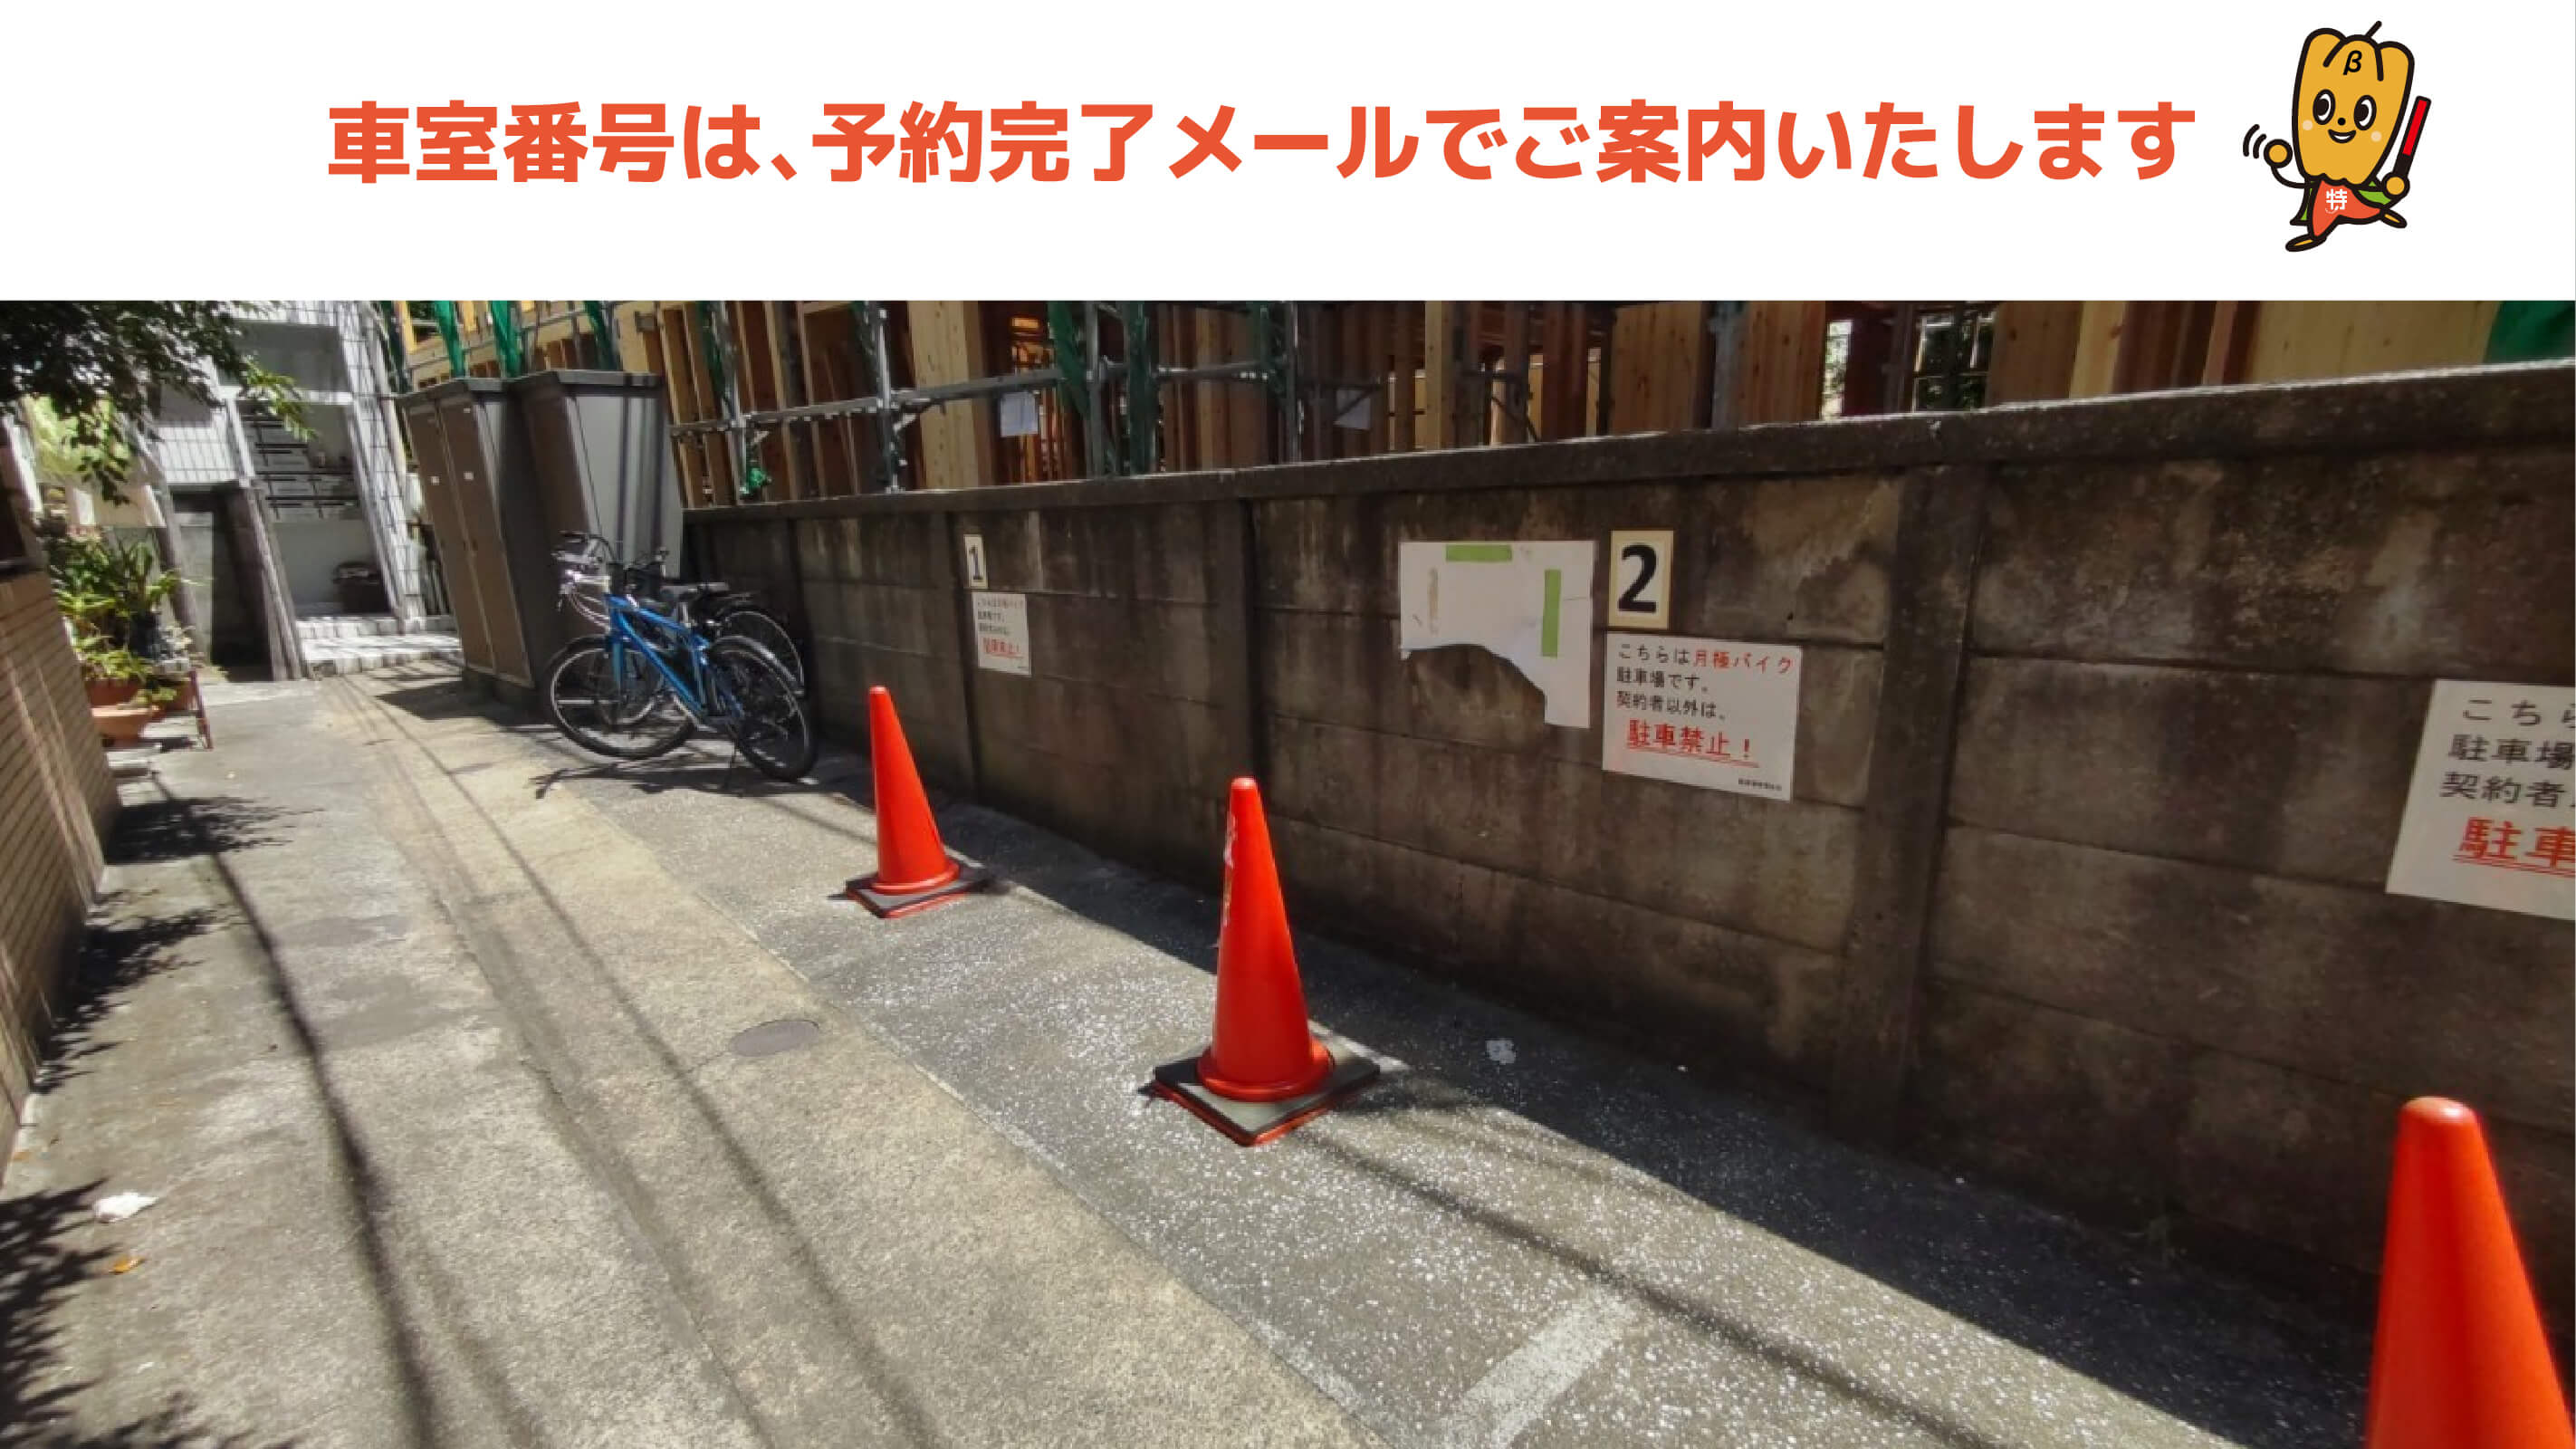 Bunkamura・文化村から近くて安い≪バイク専用≫駒場1-39-18駐車場